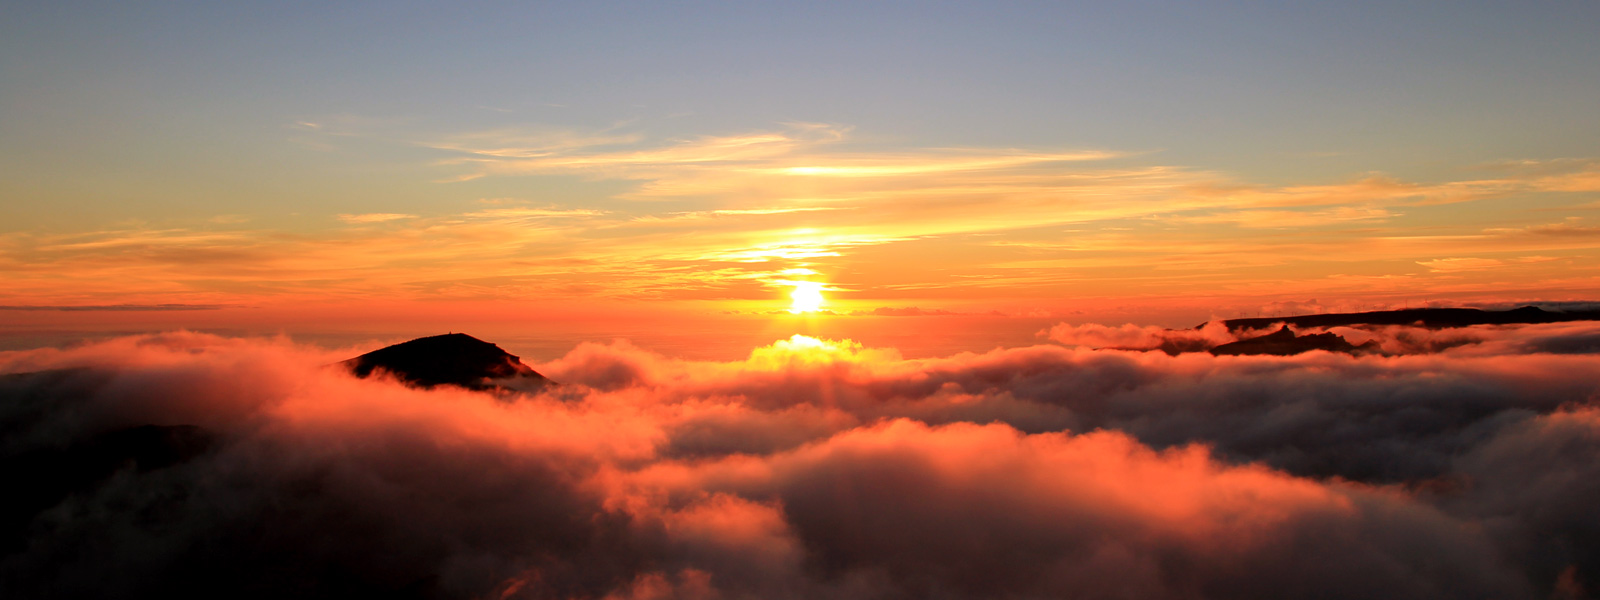 Pico do Areeiro - Sunset